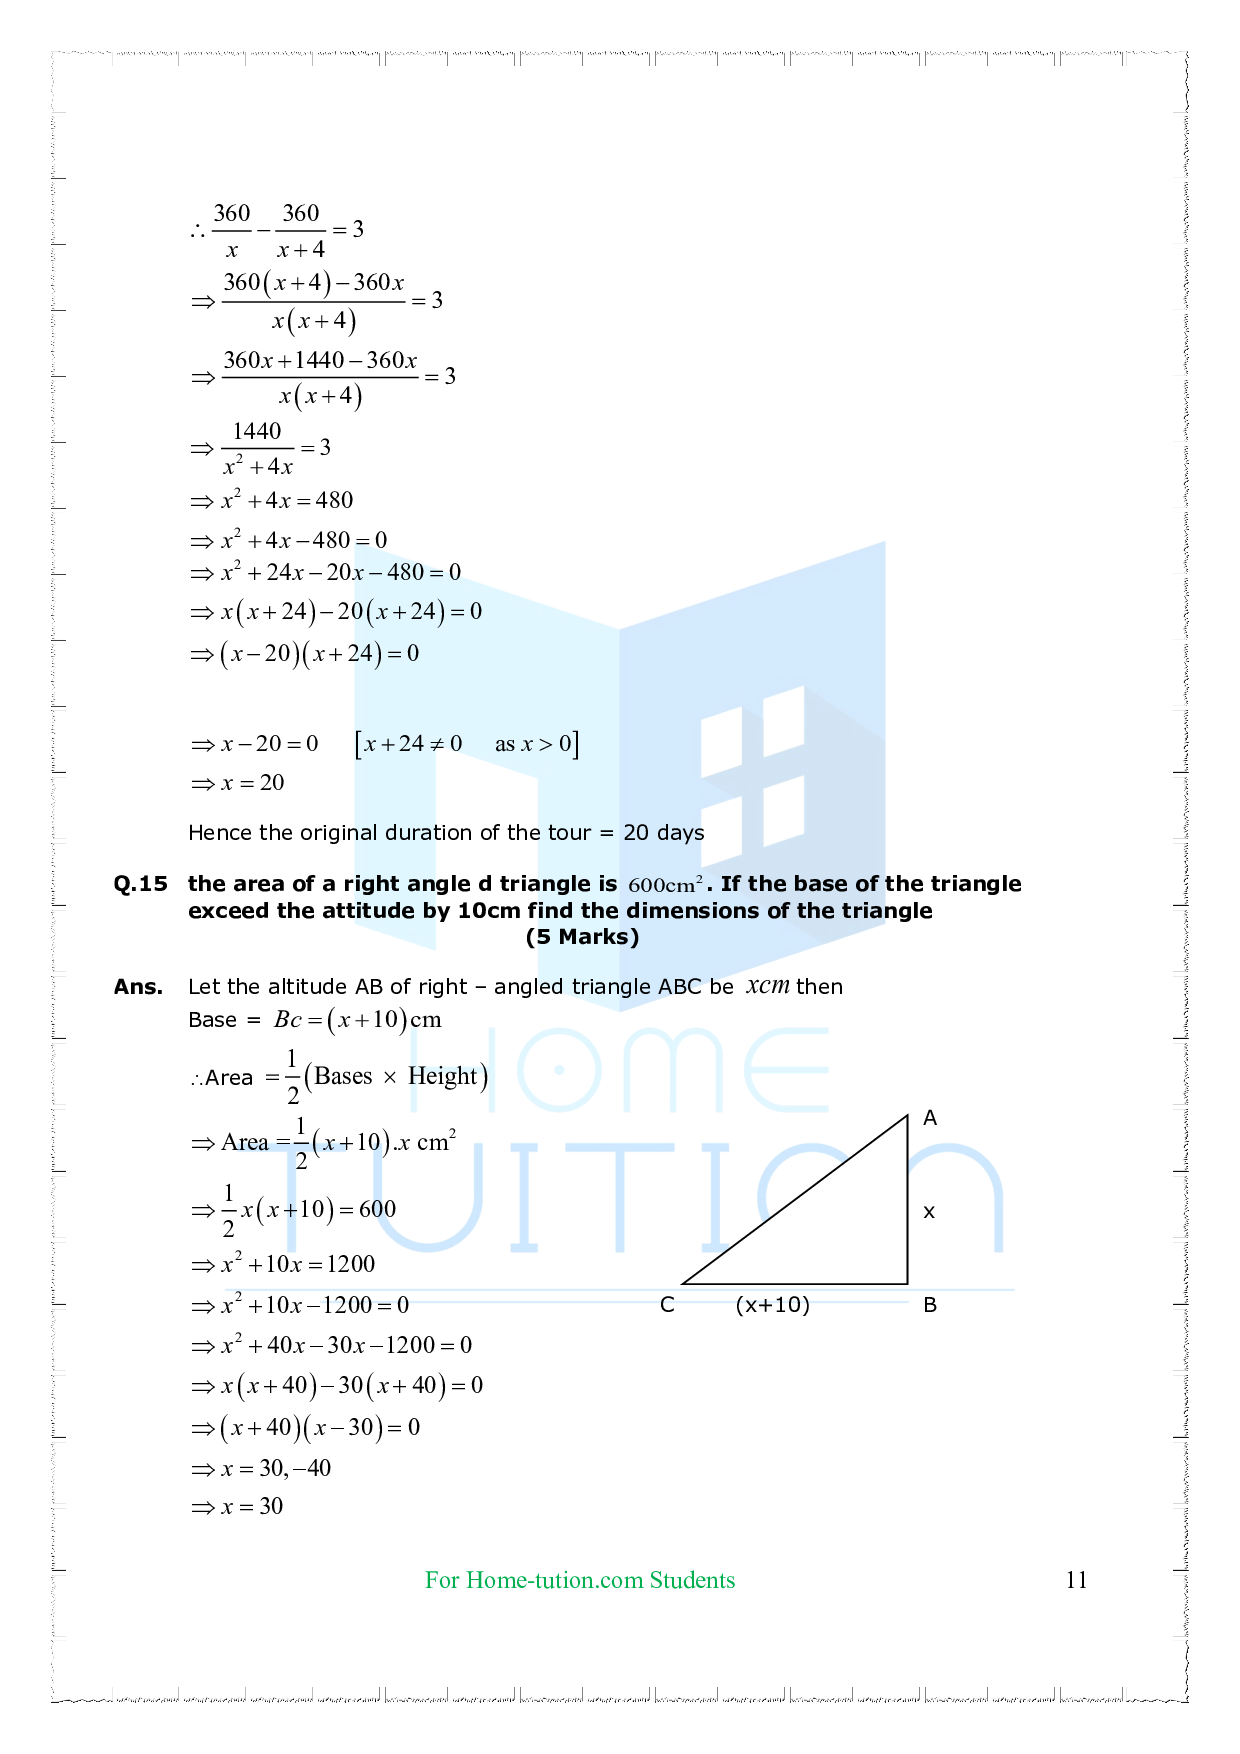 Chapter-4 Quadratic Equations Questions